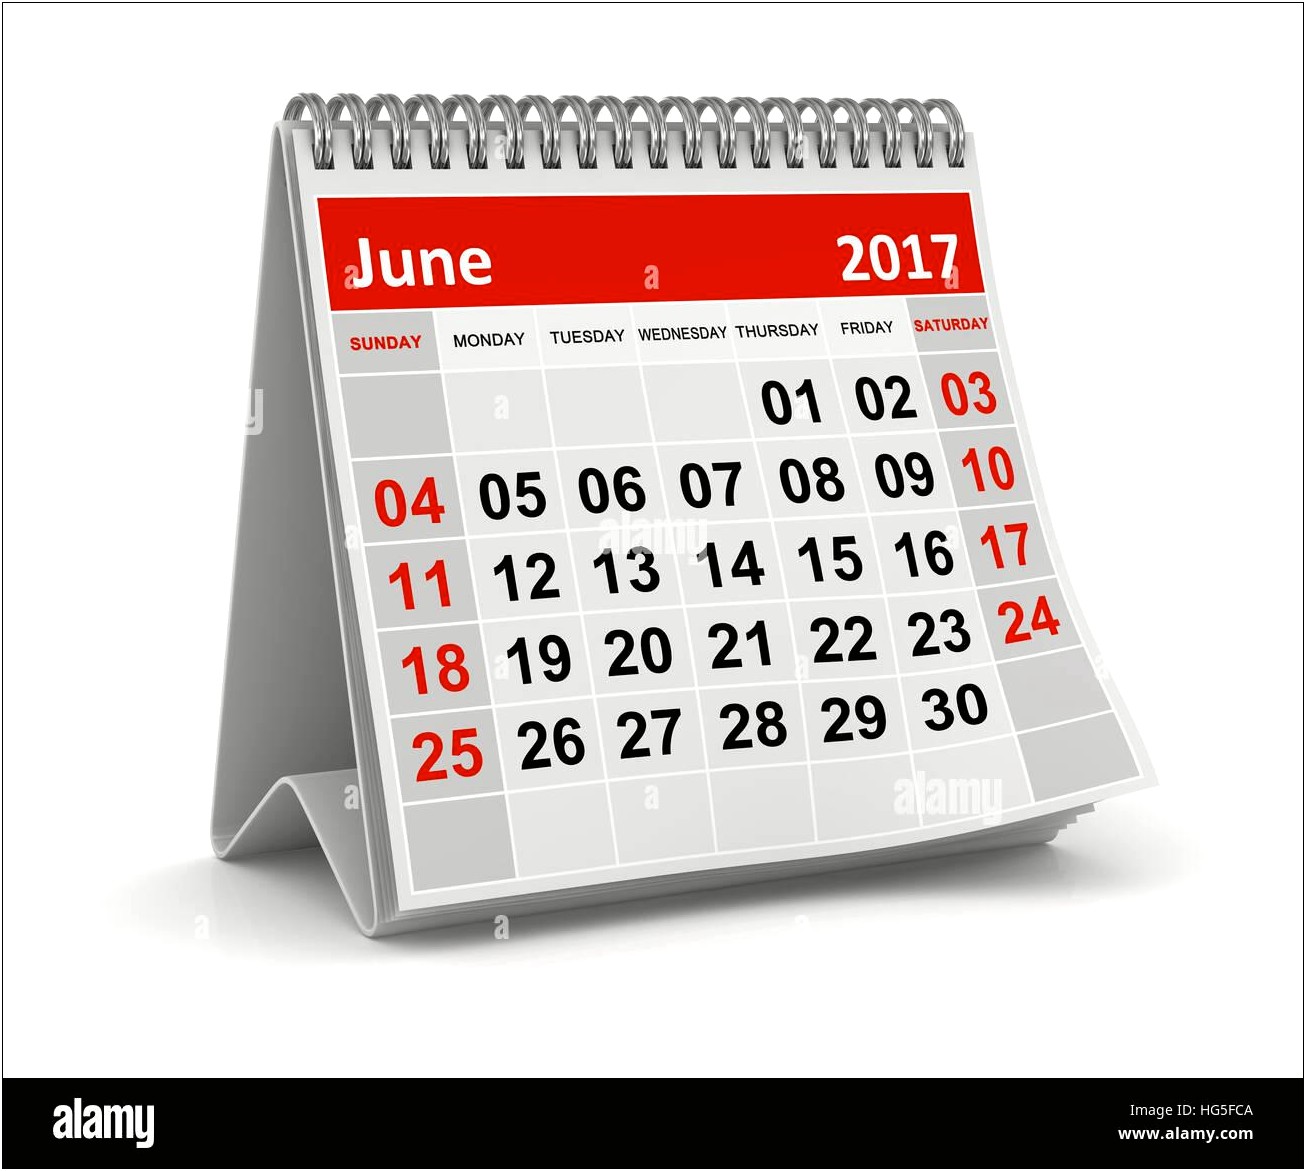 Free Monthly Calendar Template June 2017